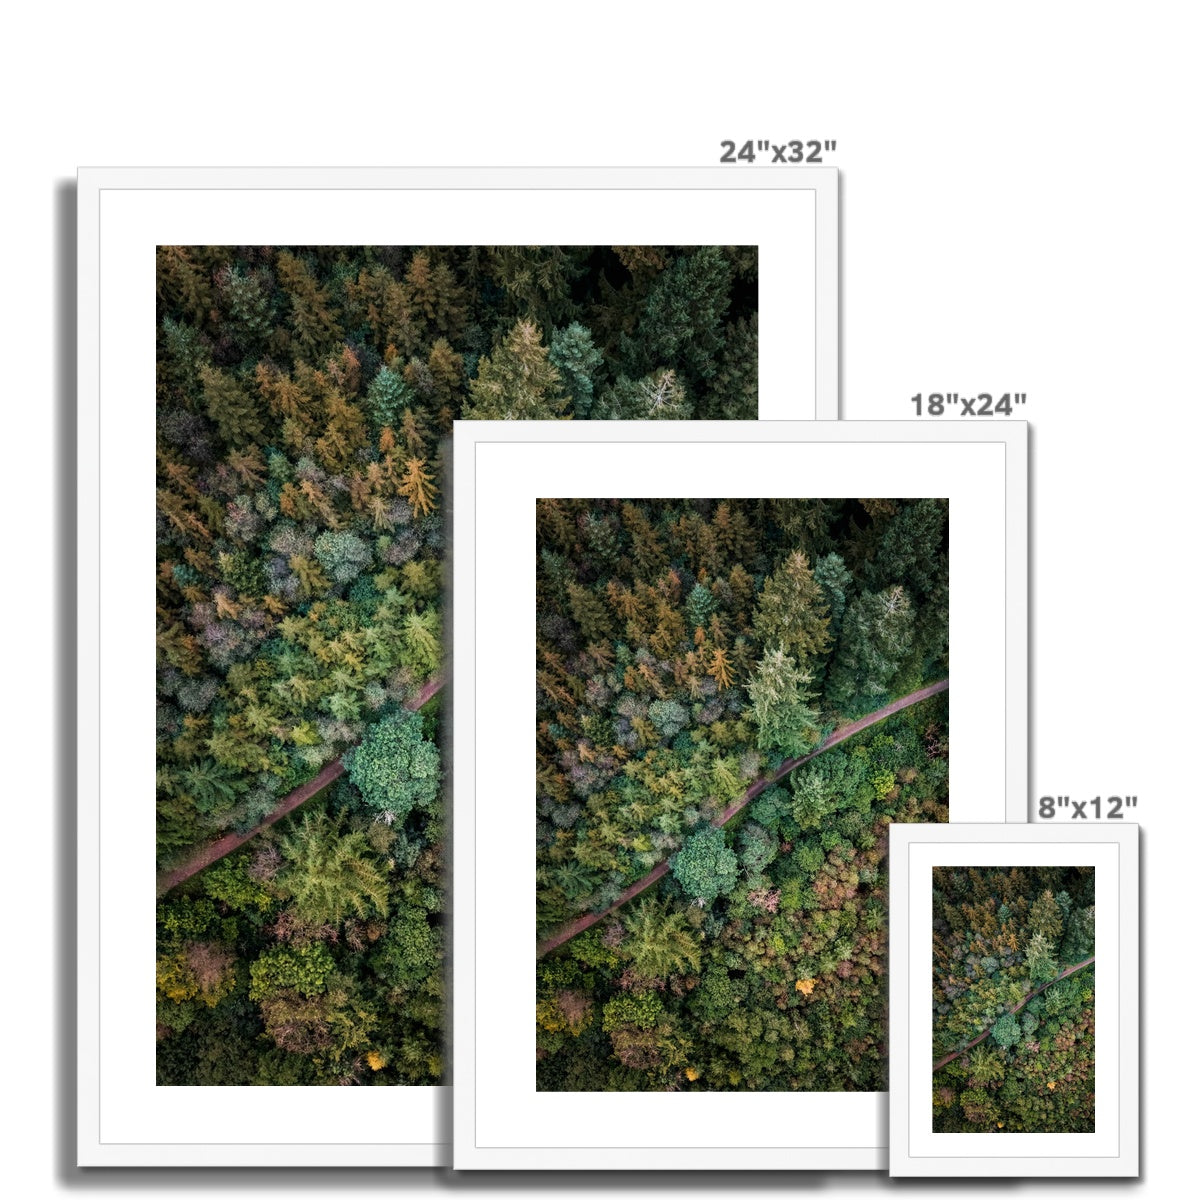 cardinham woods frame sizes